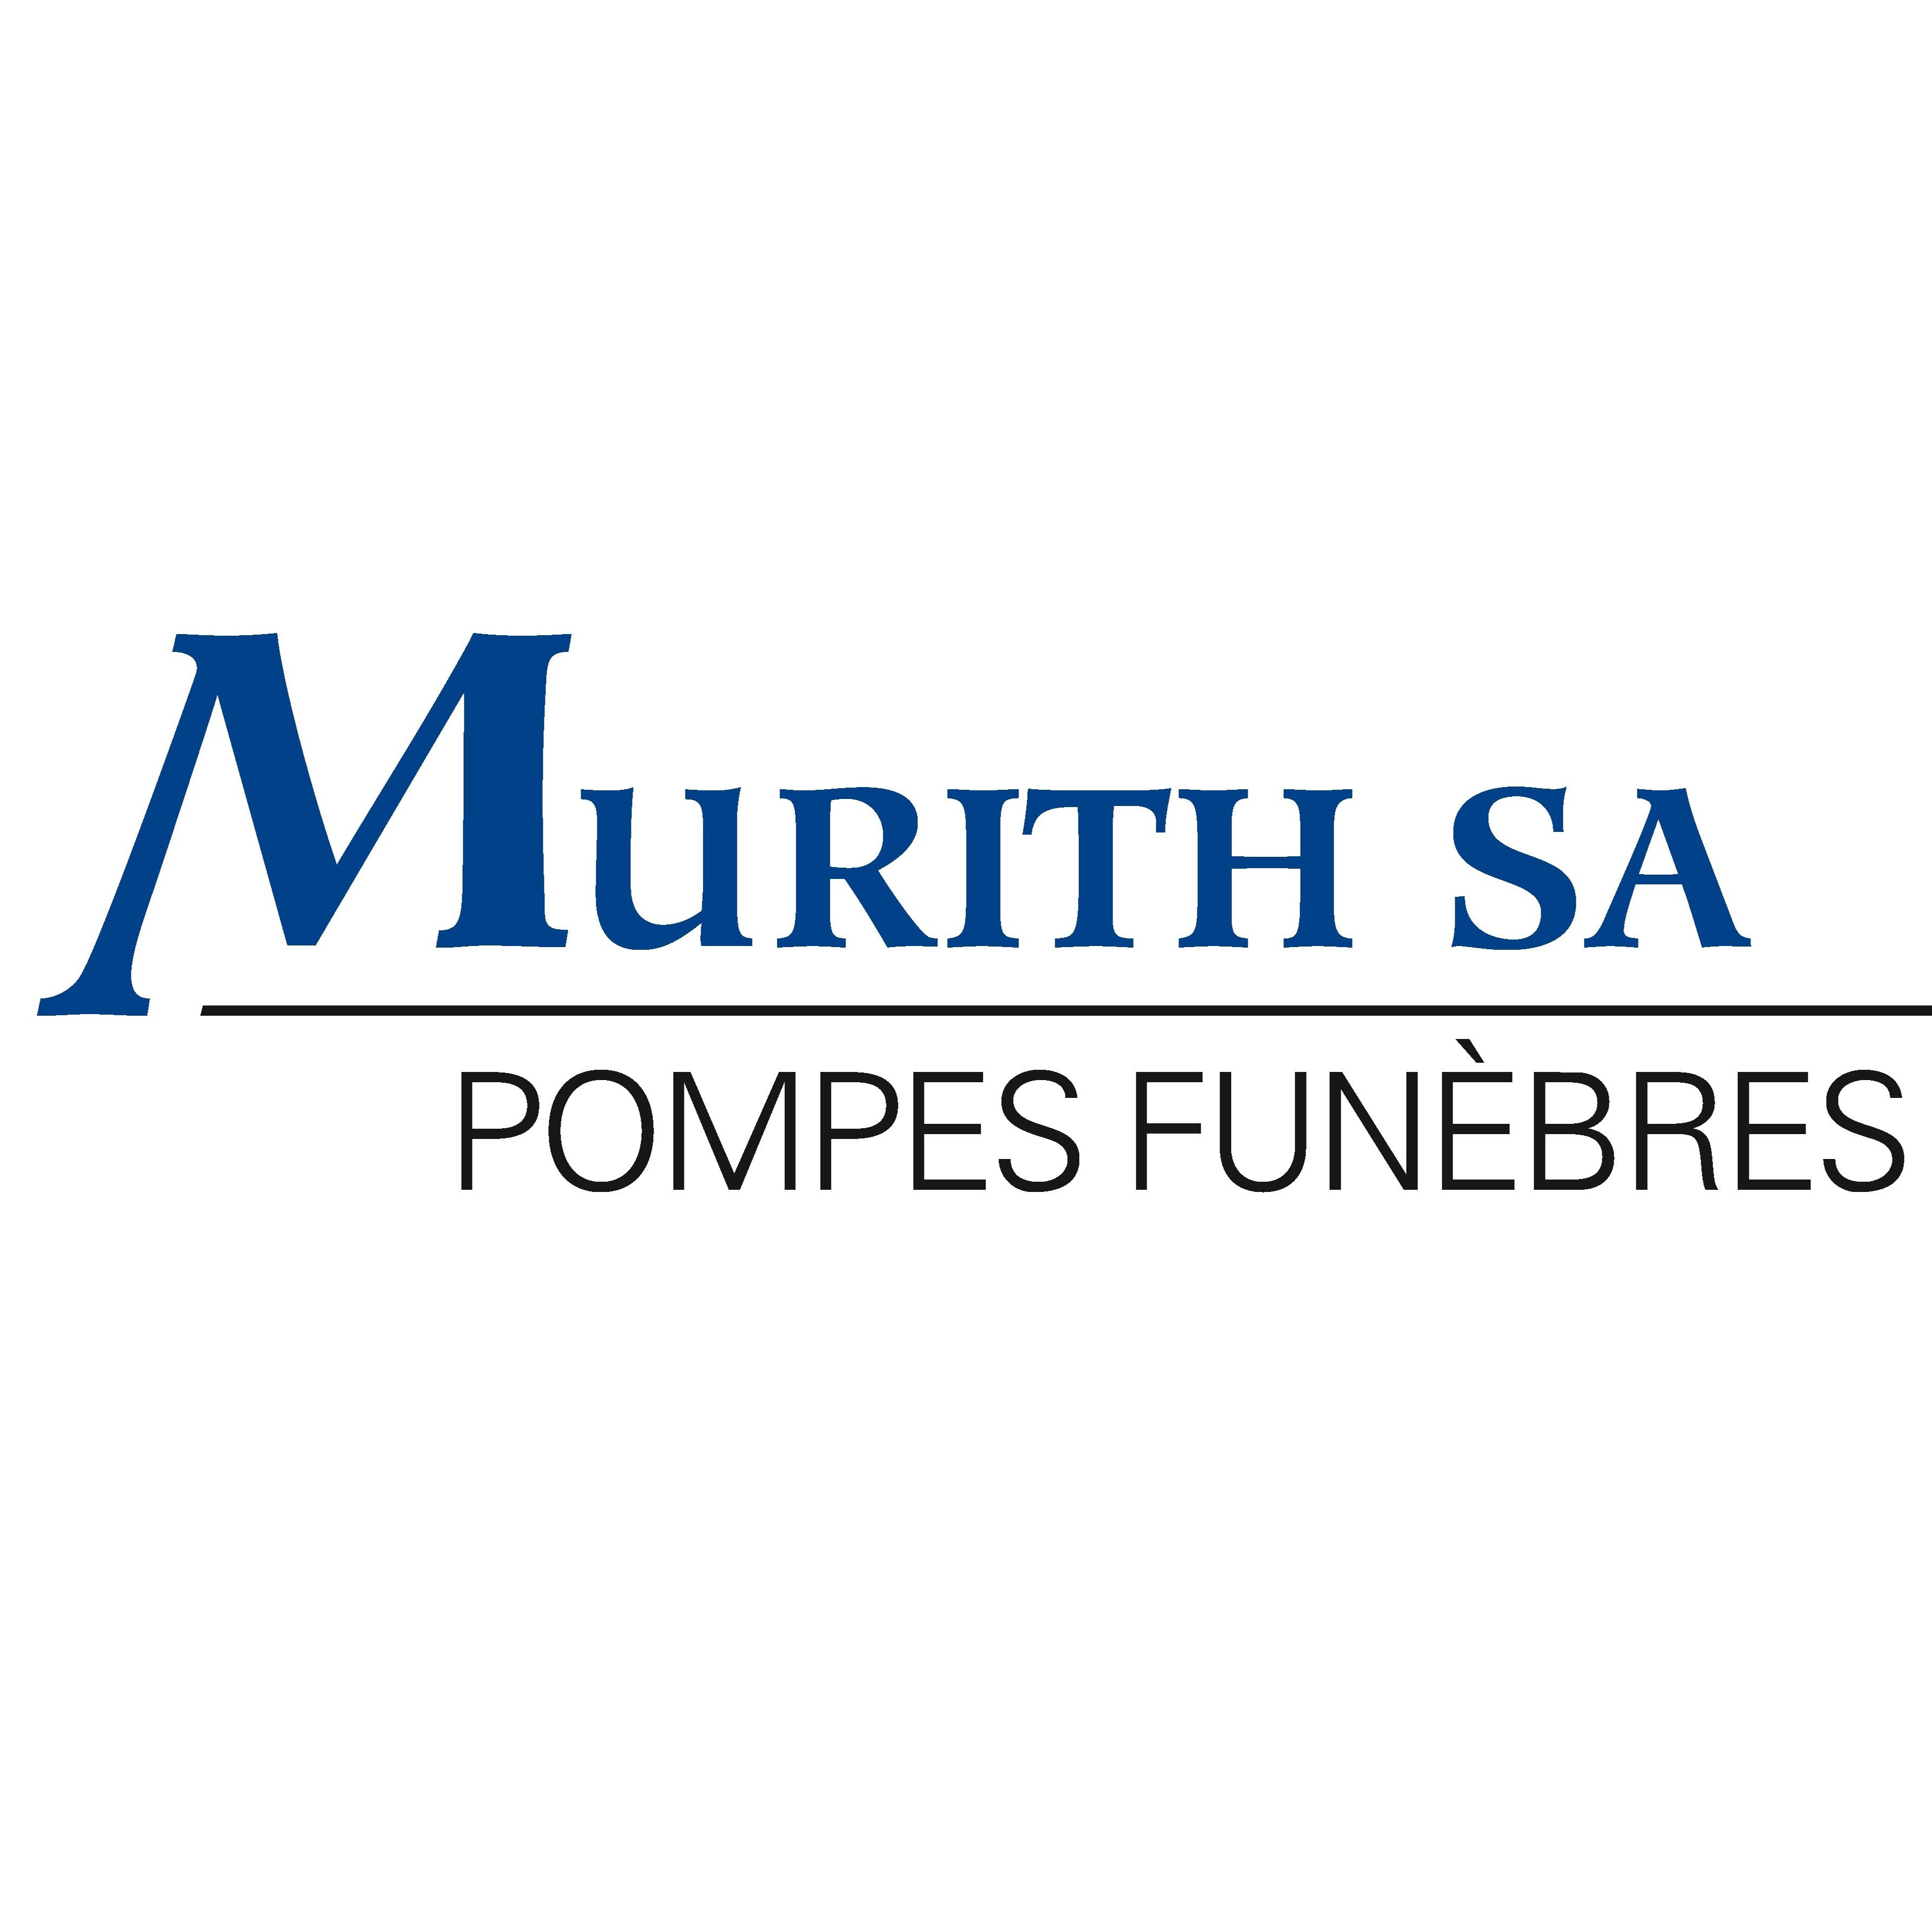 Pompes funèbres P. Murith SA Logo